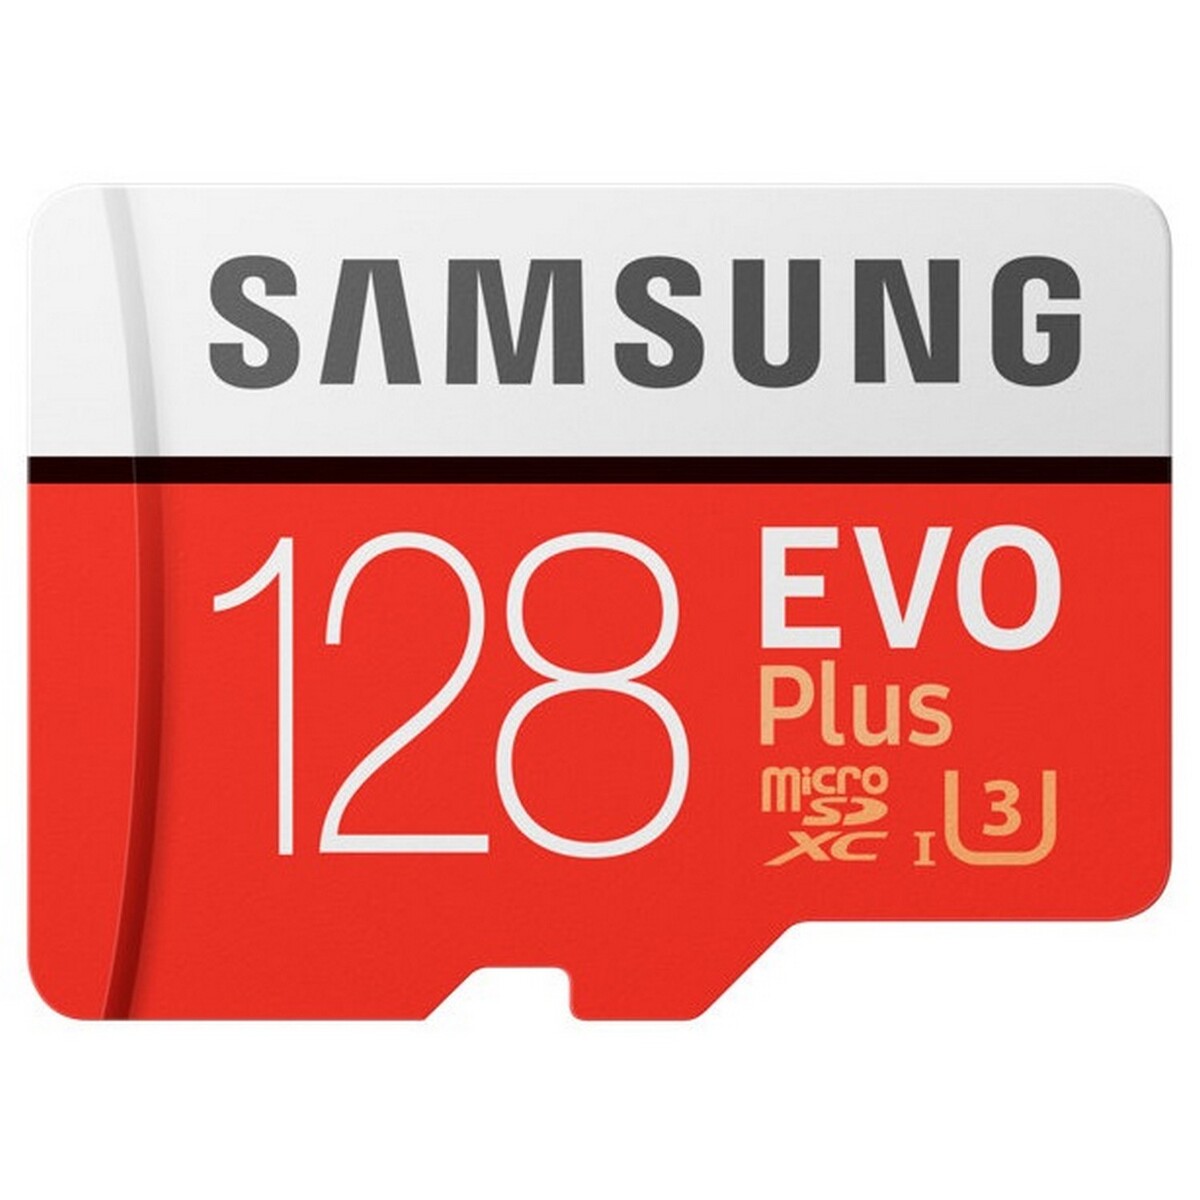 Samsung Micro SD Card Evo Plus 128GB